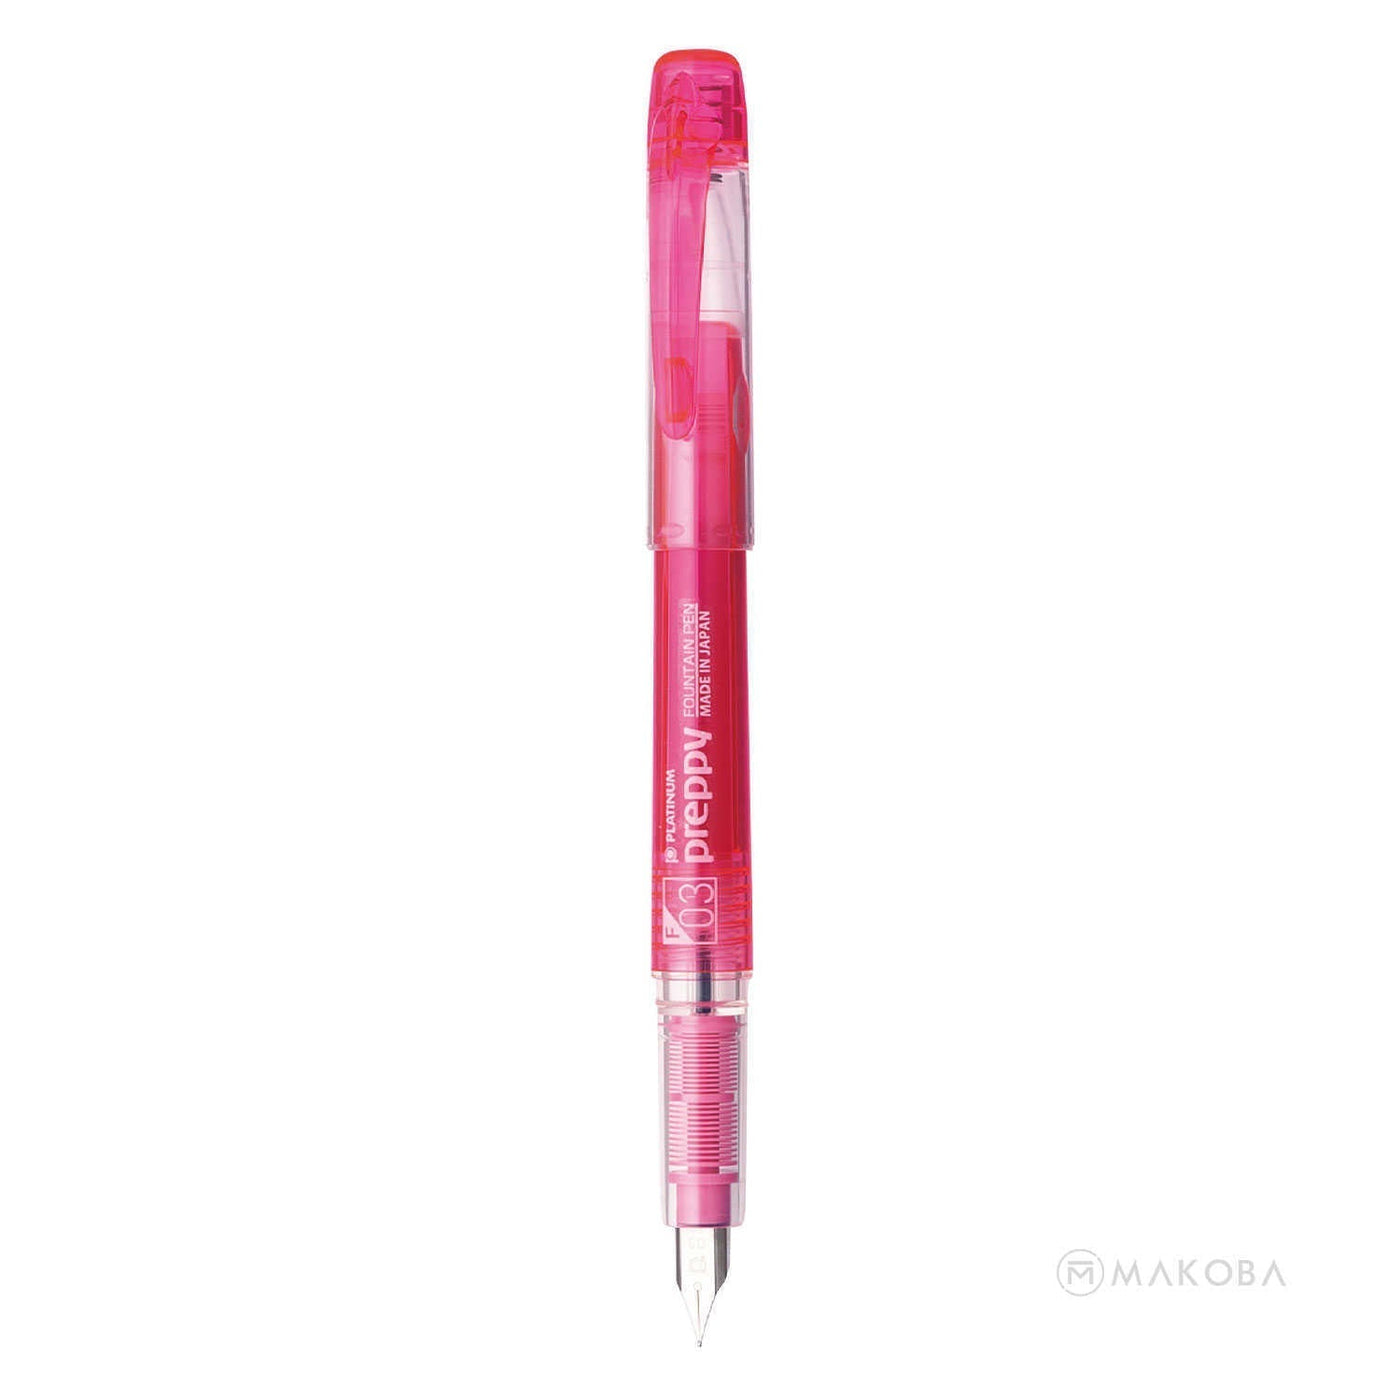 Platinum Preppy Fountain Pen, Pink - Steel Nib